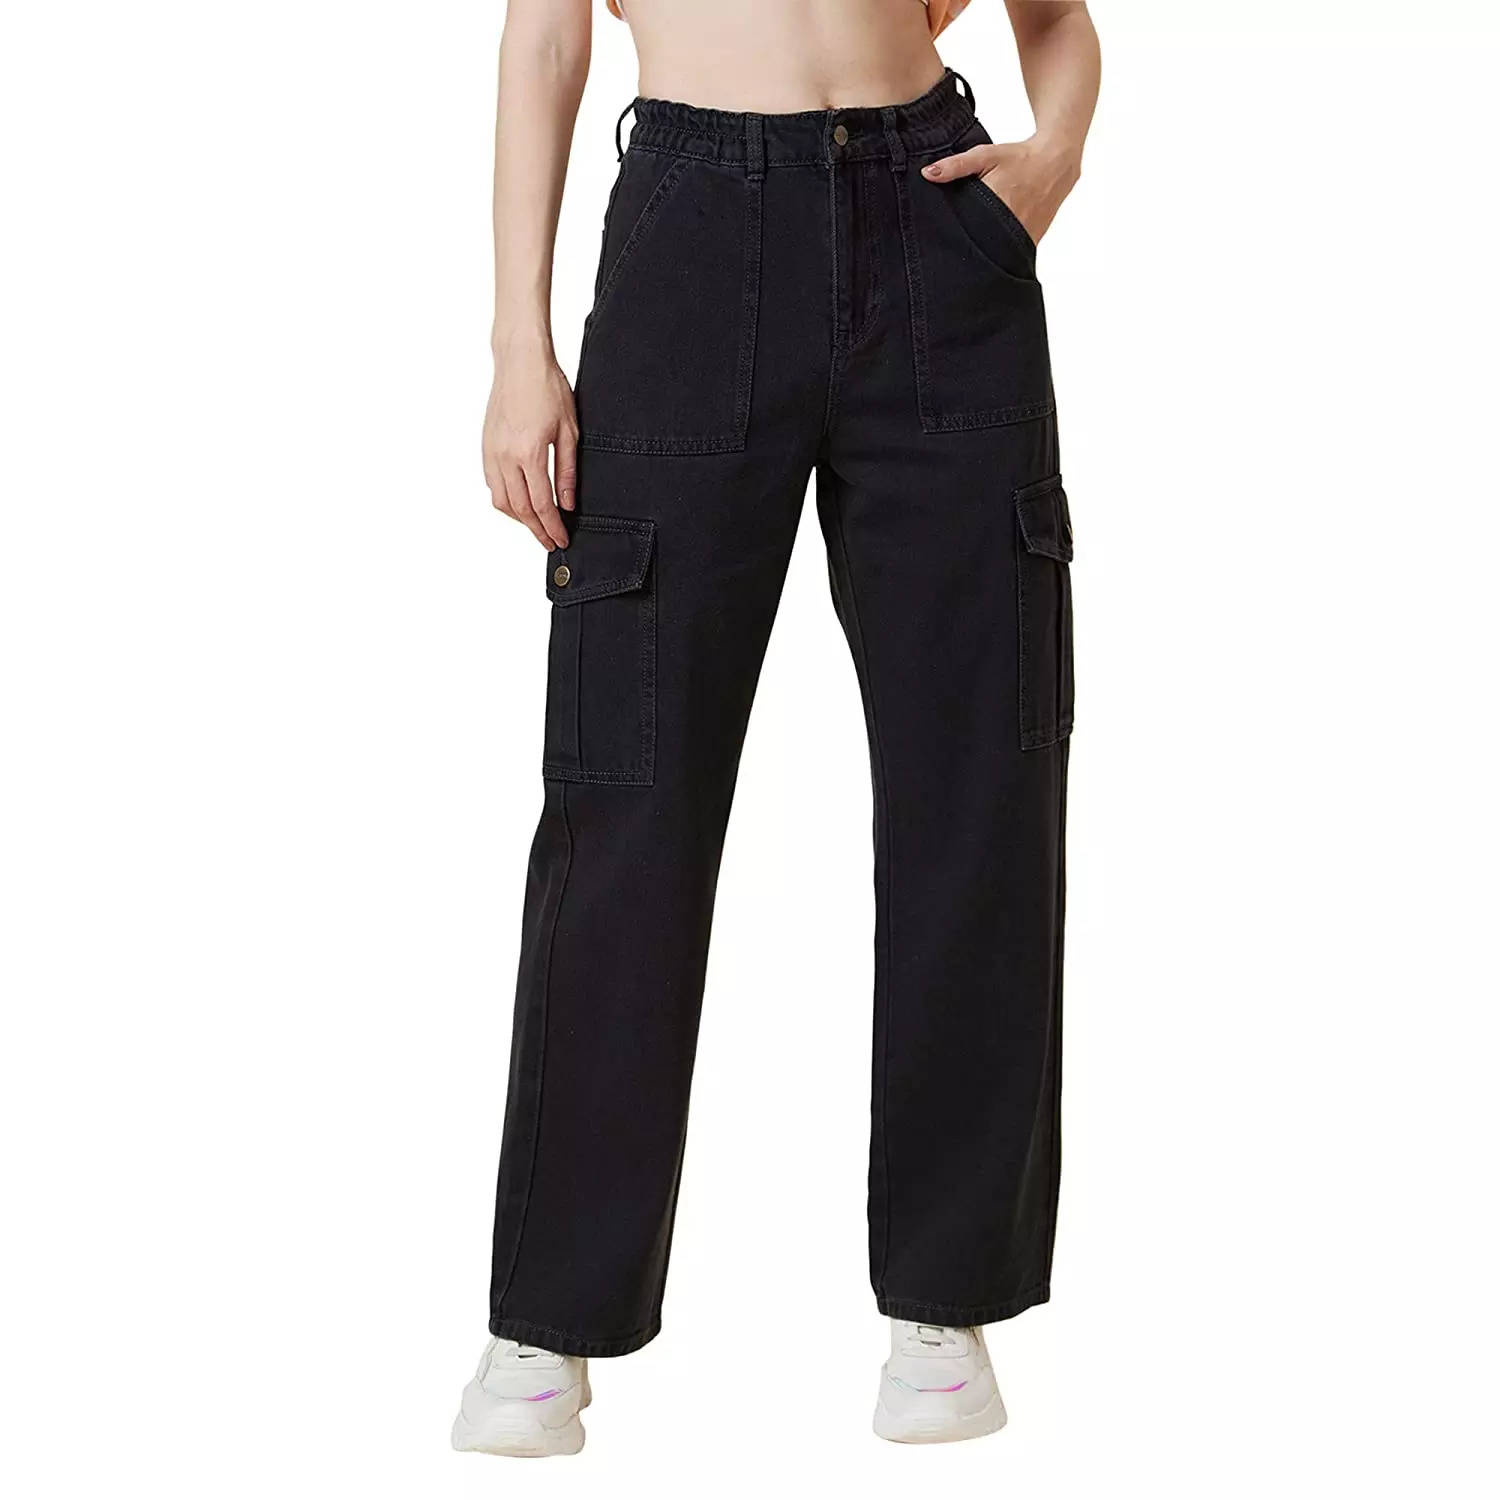 Buy Black Track Pants for Women by Love Gen Online | Ajio.com